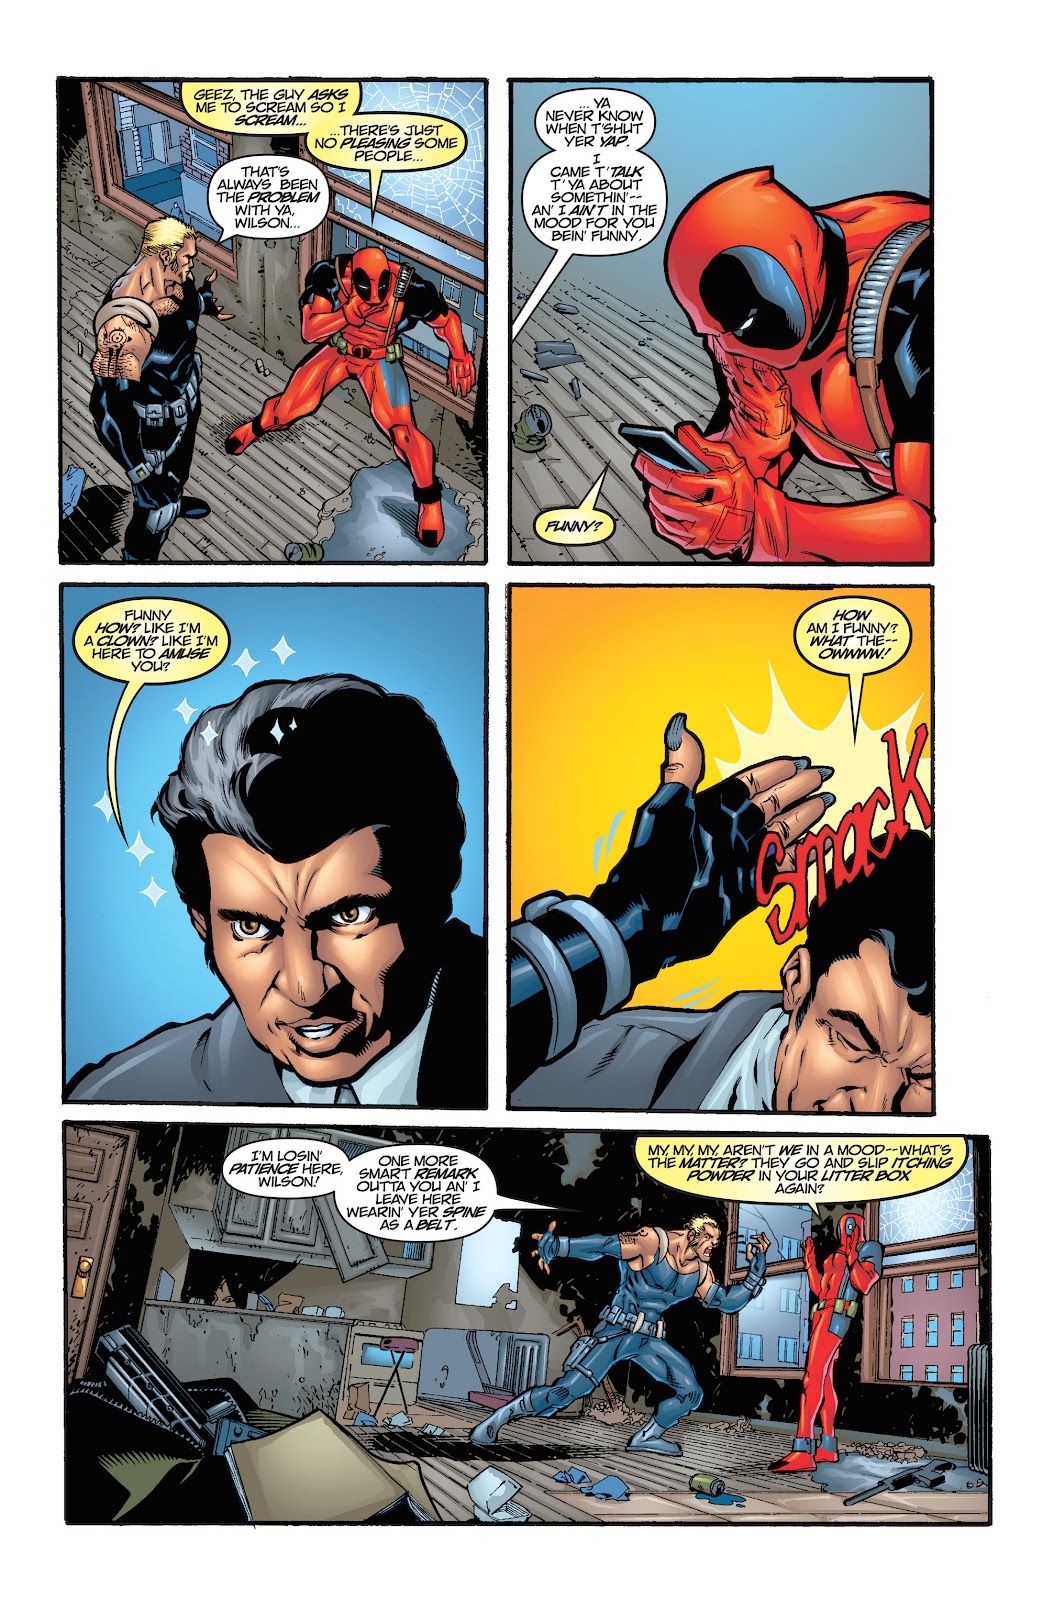 Deadpool using image inducer in Deadpool #57